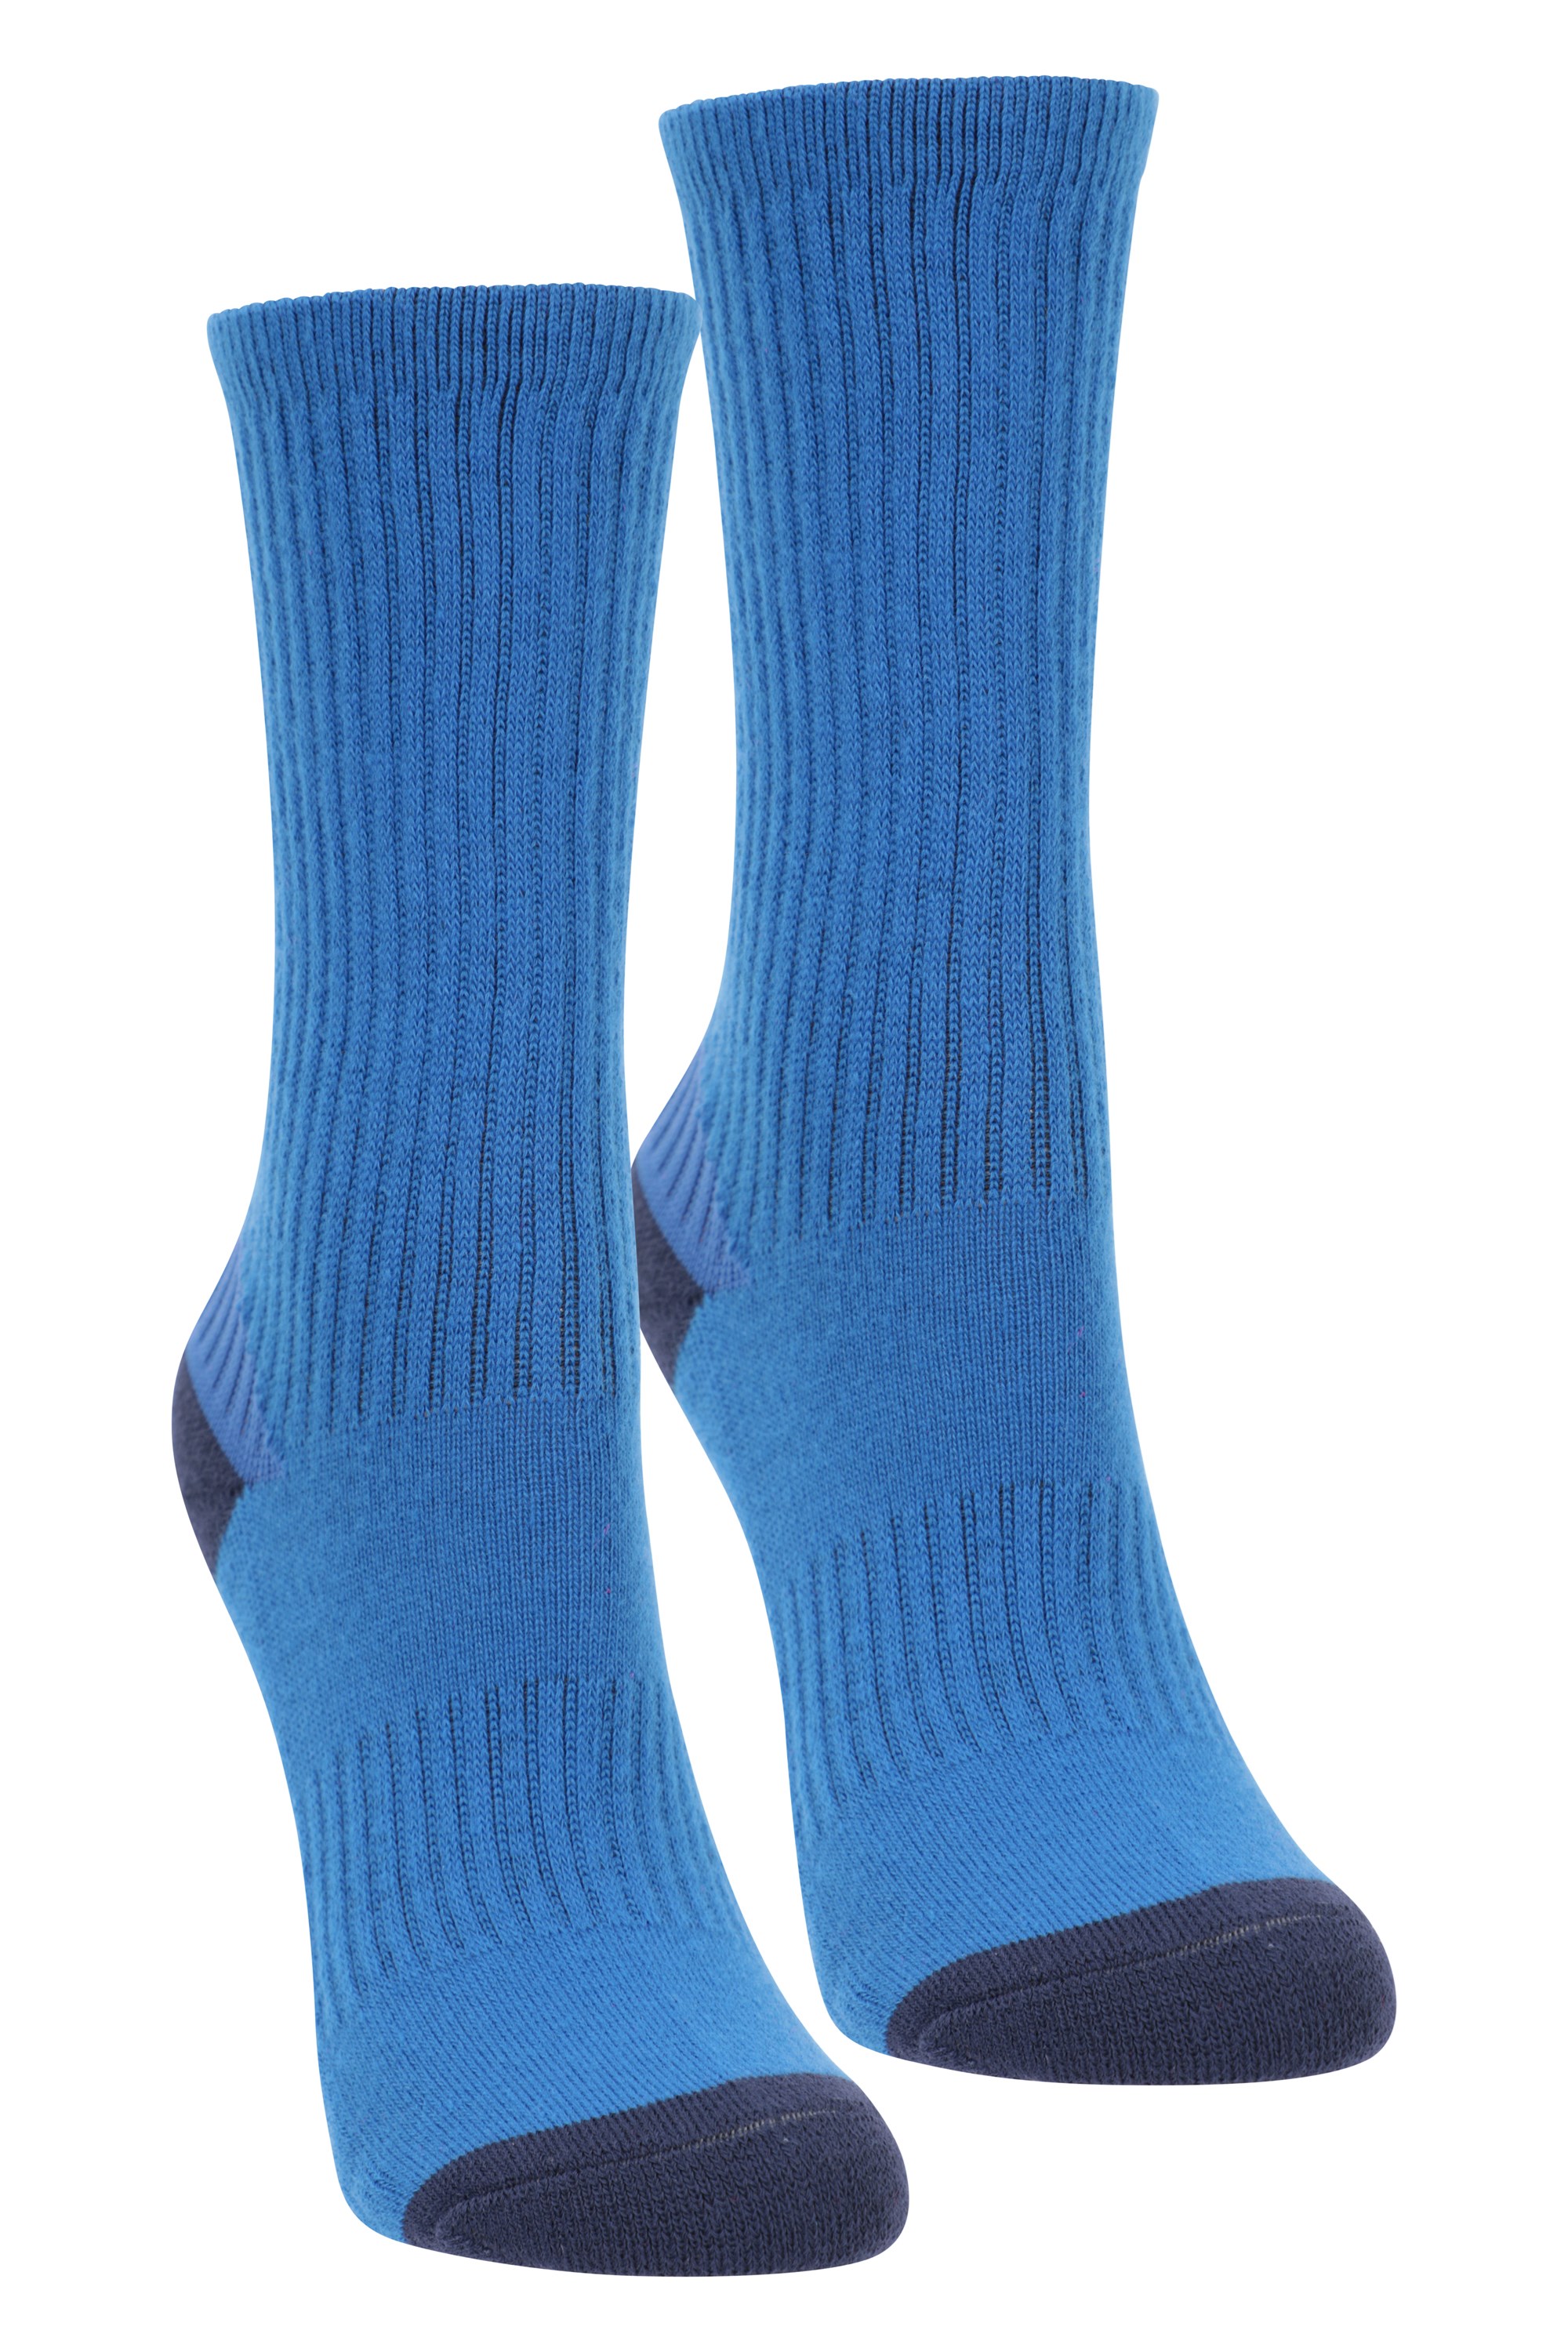 Hiker Kid's Socks 2 Pack - Blue